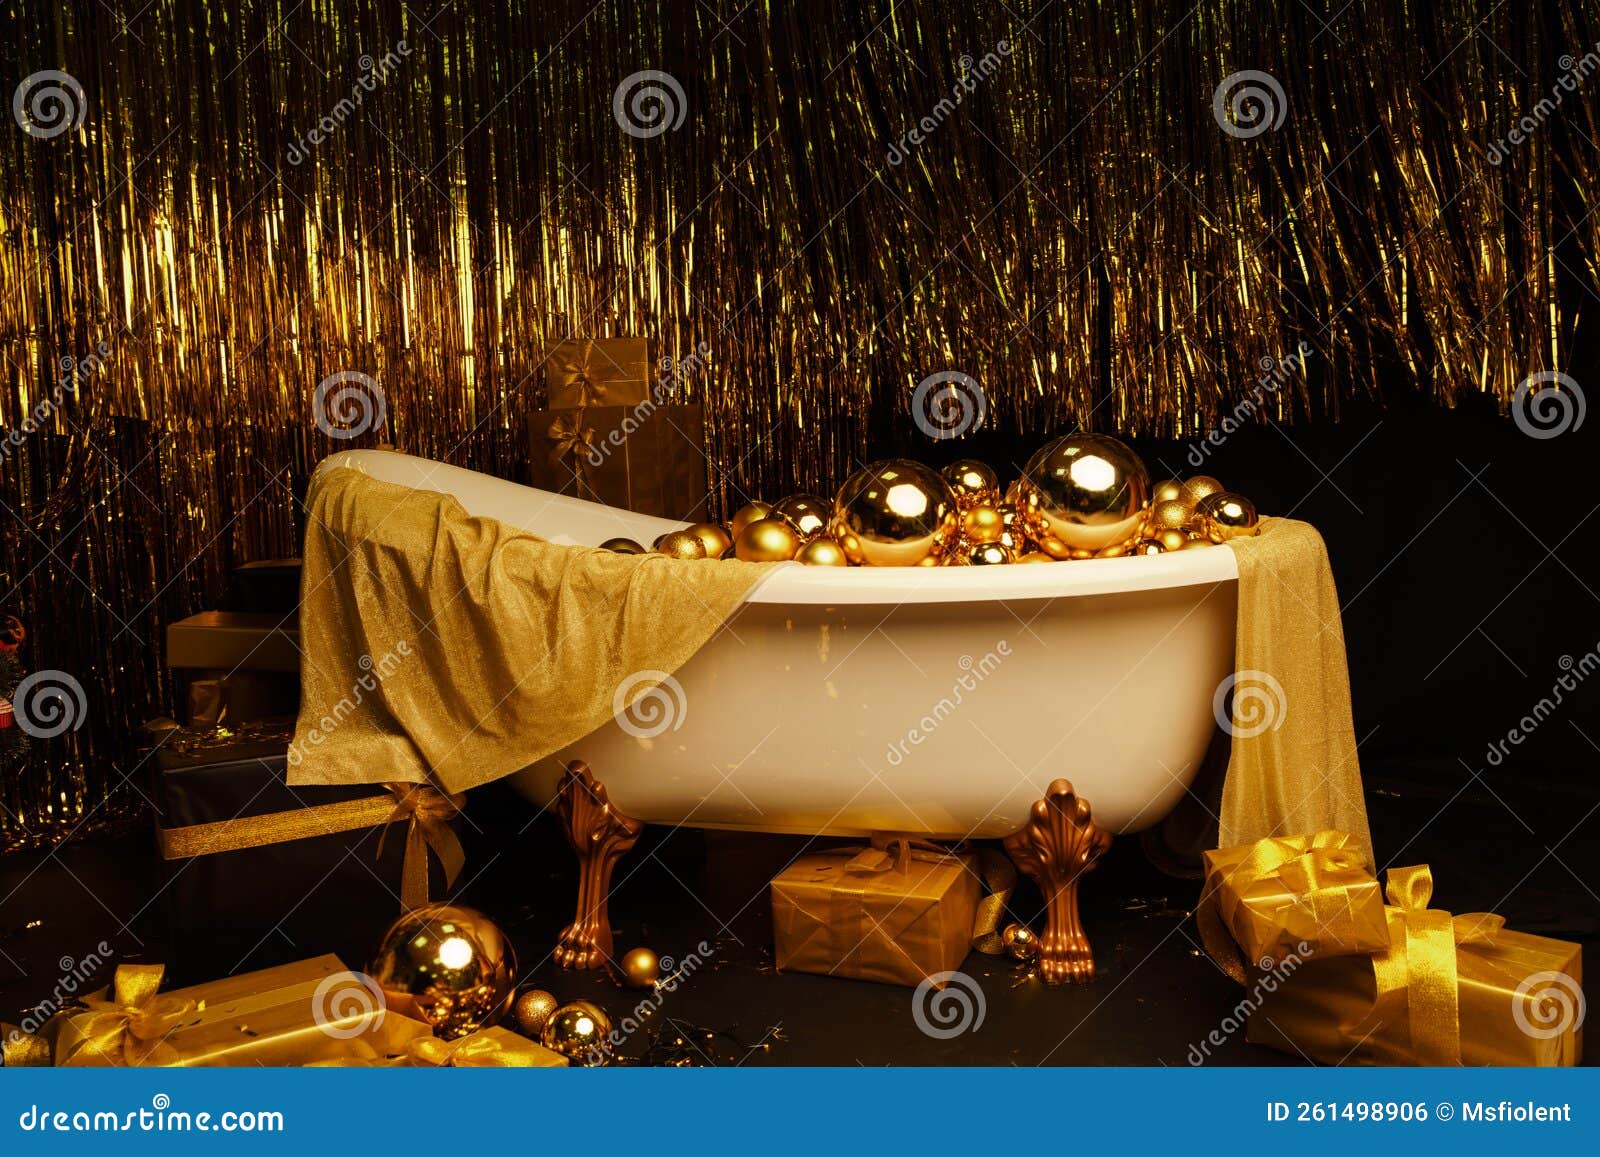 Bathtub Full of Golden Balls. Vintage Bright Bathroom Decorated with ...